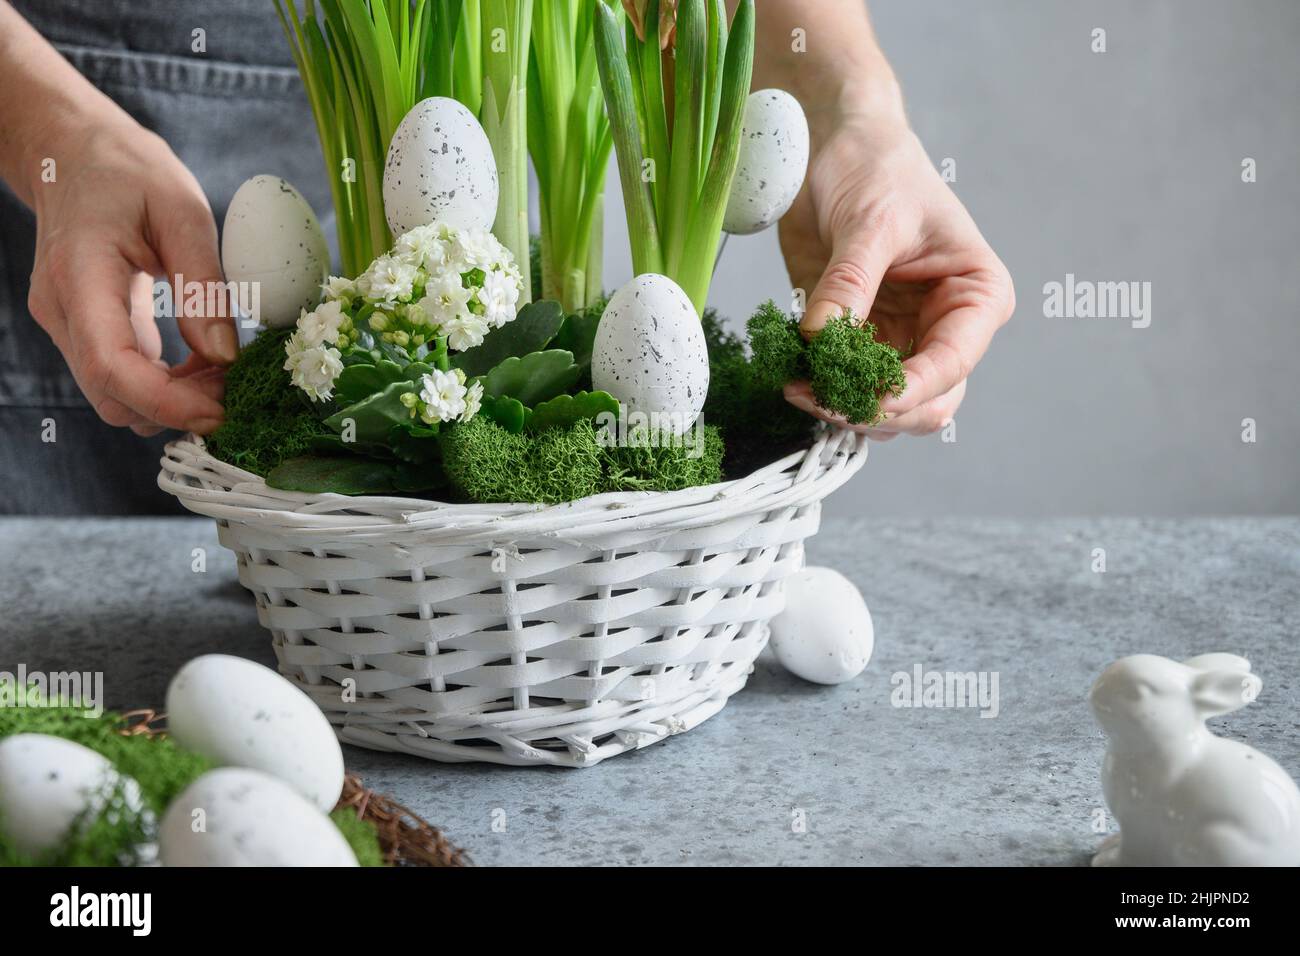 DIY Moss Covered Eggs